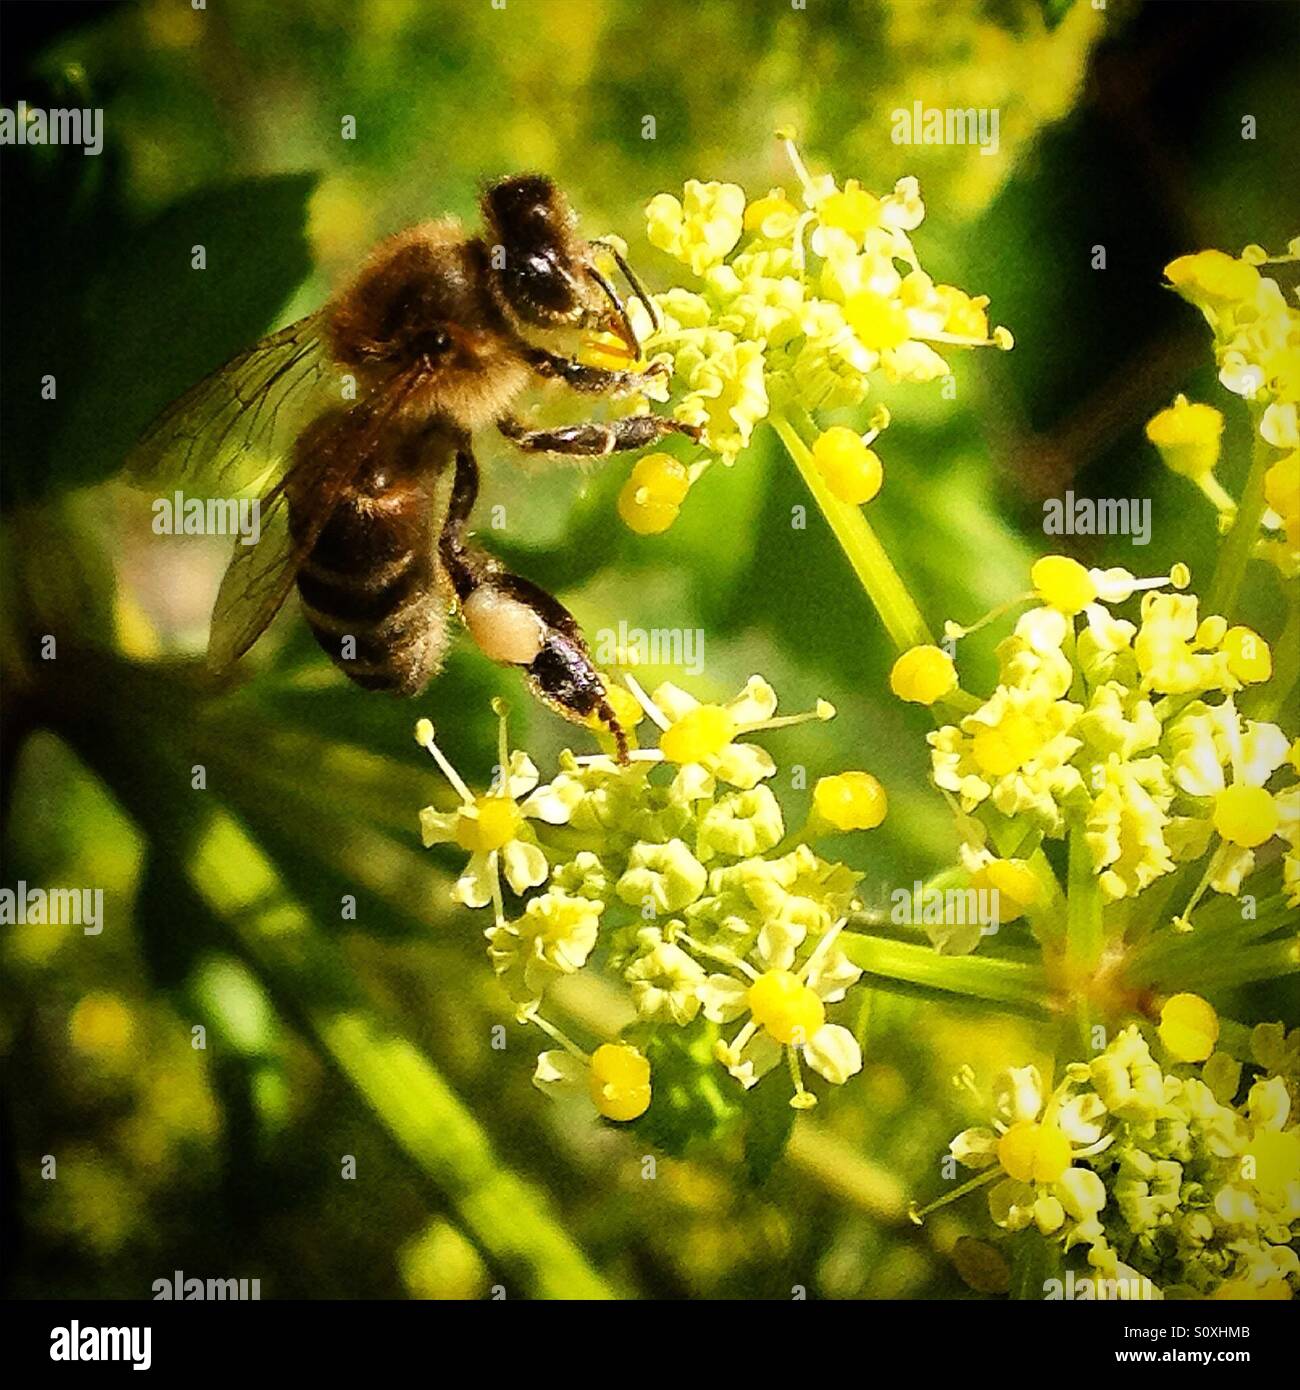 A honey bee perchs on a yellow flower in Algodonales, Sierra de Cadiz, Andalusia, Spain Stock Photo